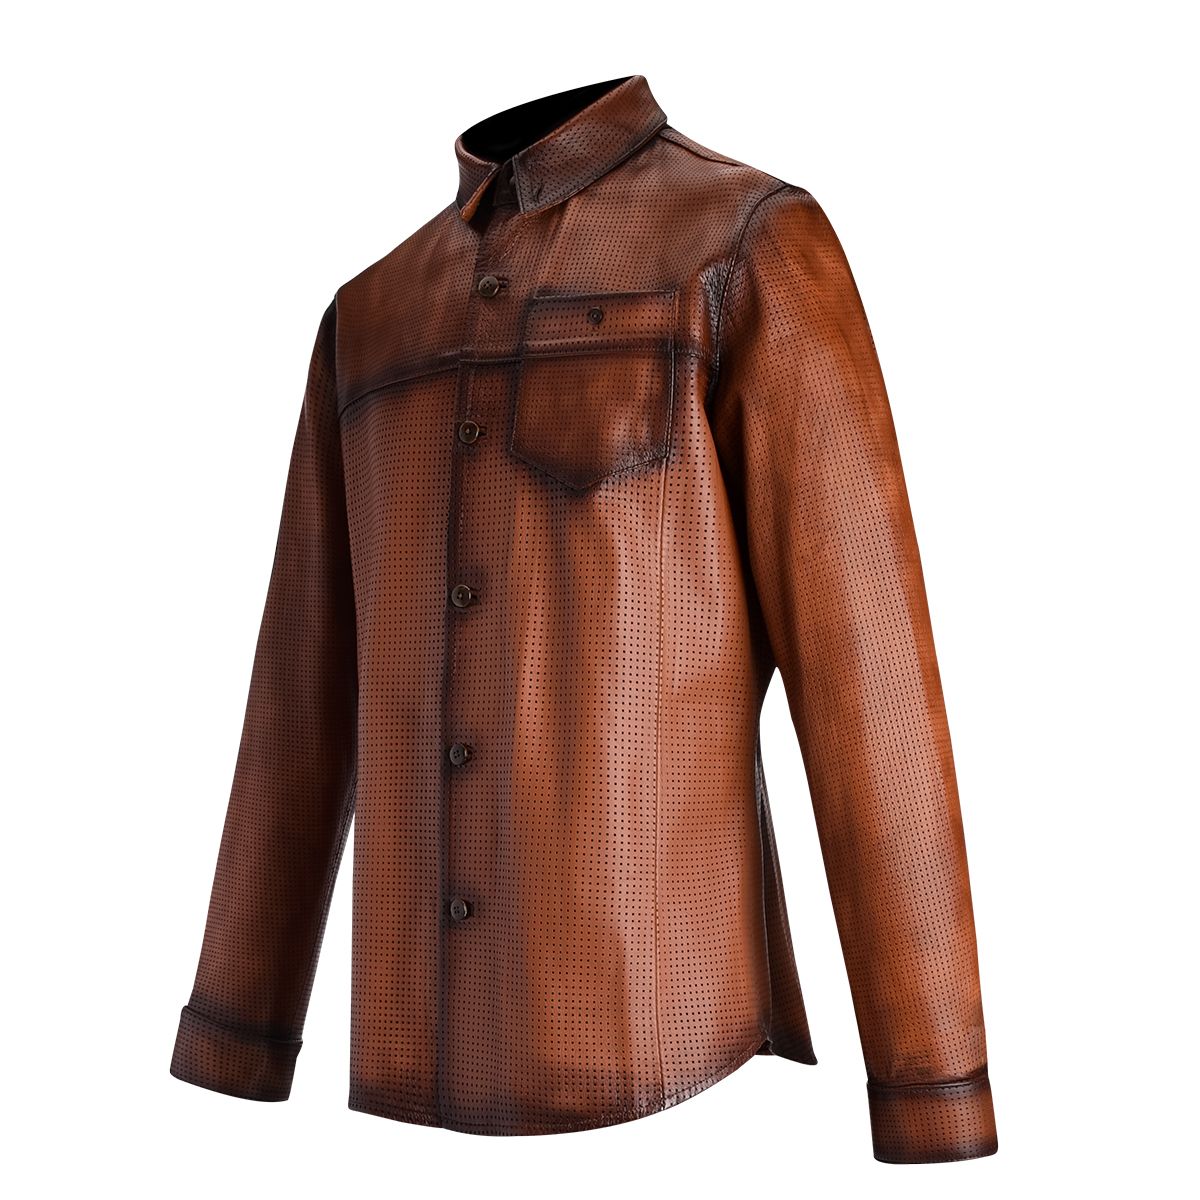 H280COC - Cuadra vegetal brown western fashion leather shirt jacket for men-CUADRA-Kuet-Cuadra-Boots